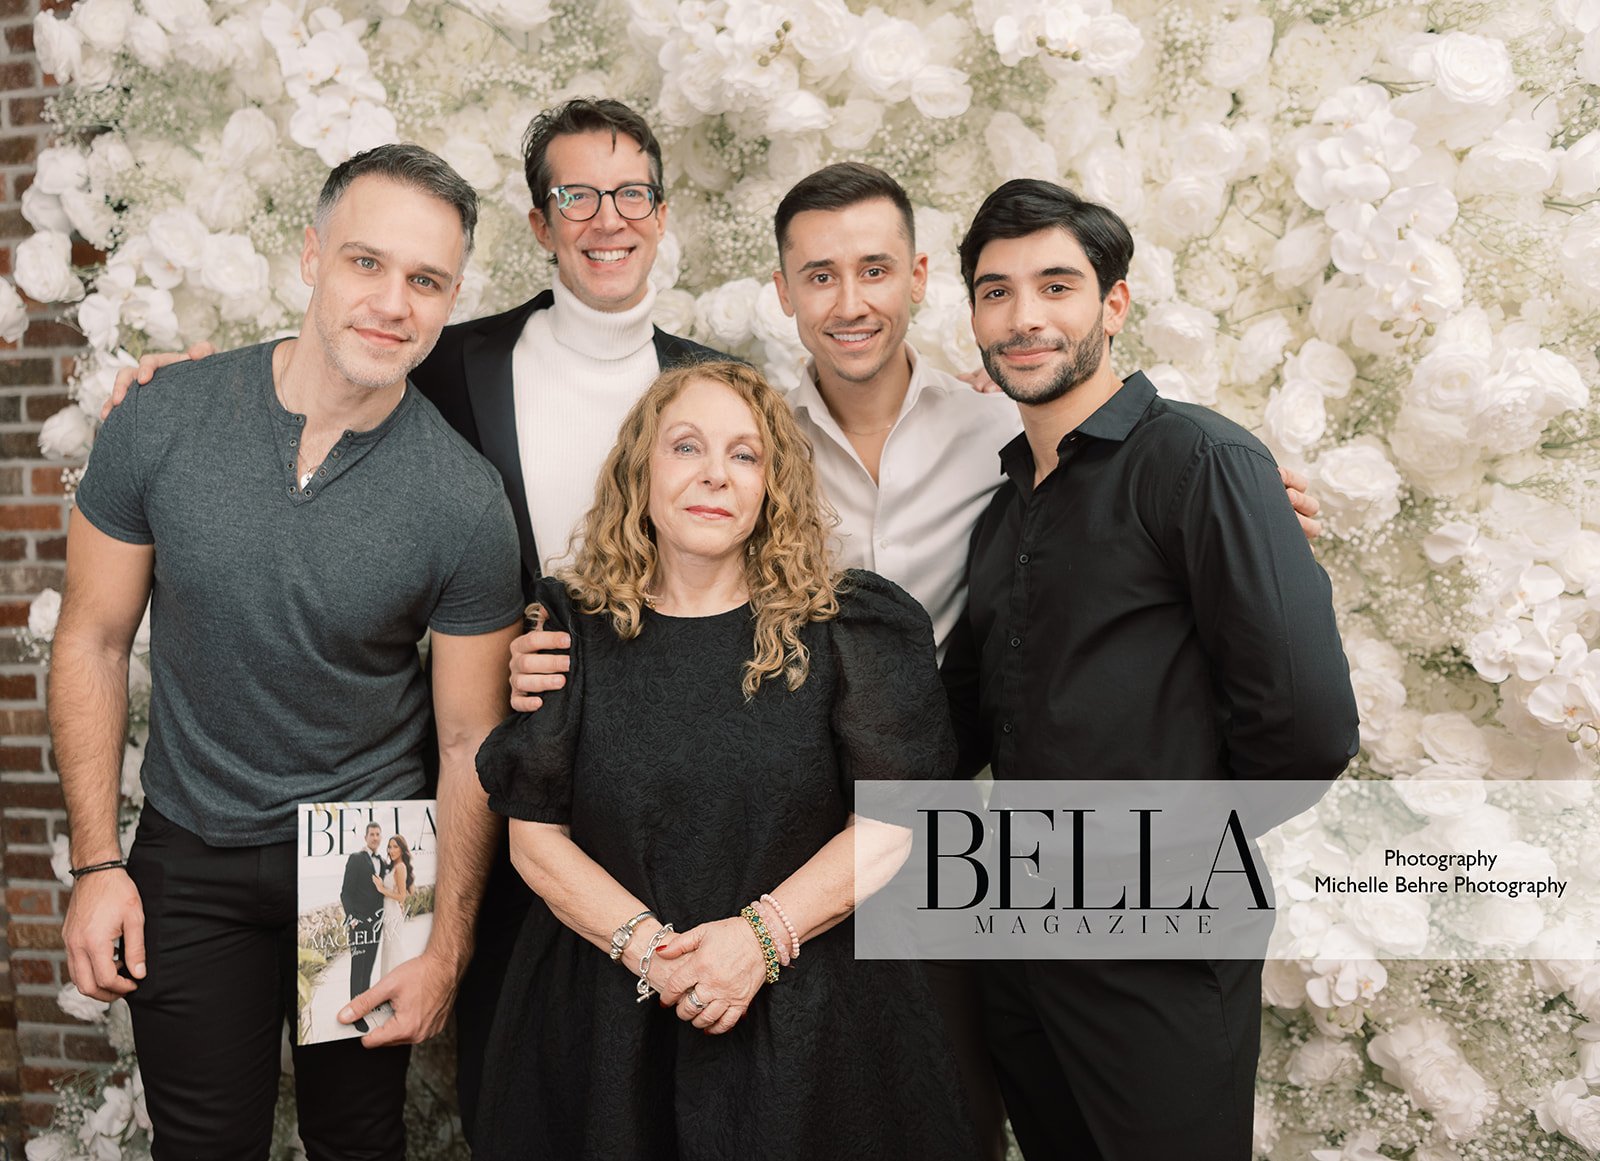 Michelle-Behre-Photography-BELLA-Magazine-Wedding-Event-La-Pulperia-New-York-72.jpg